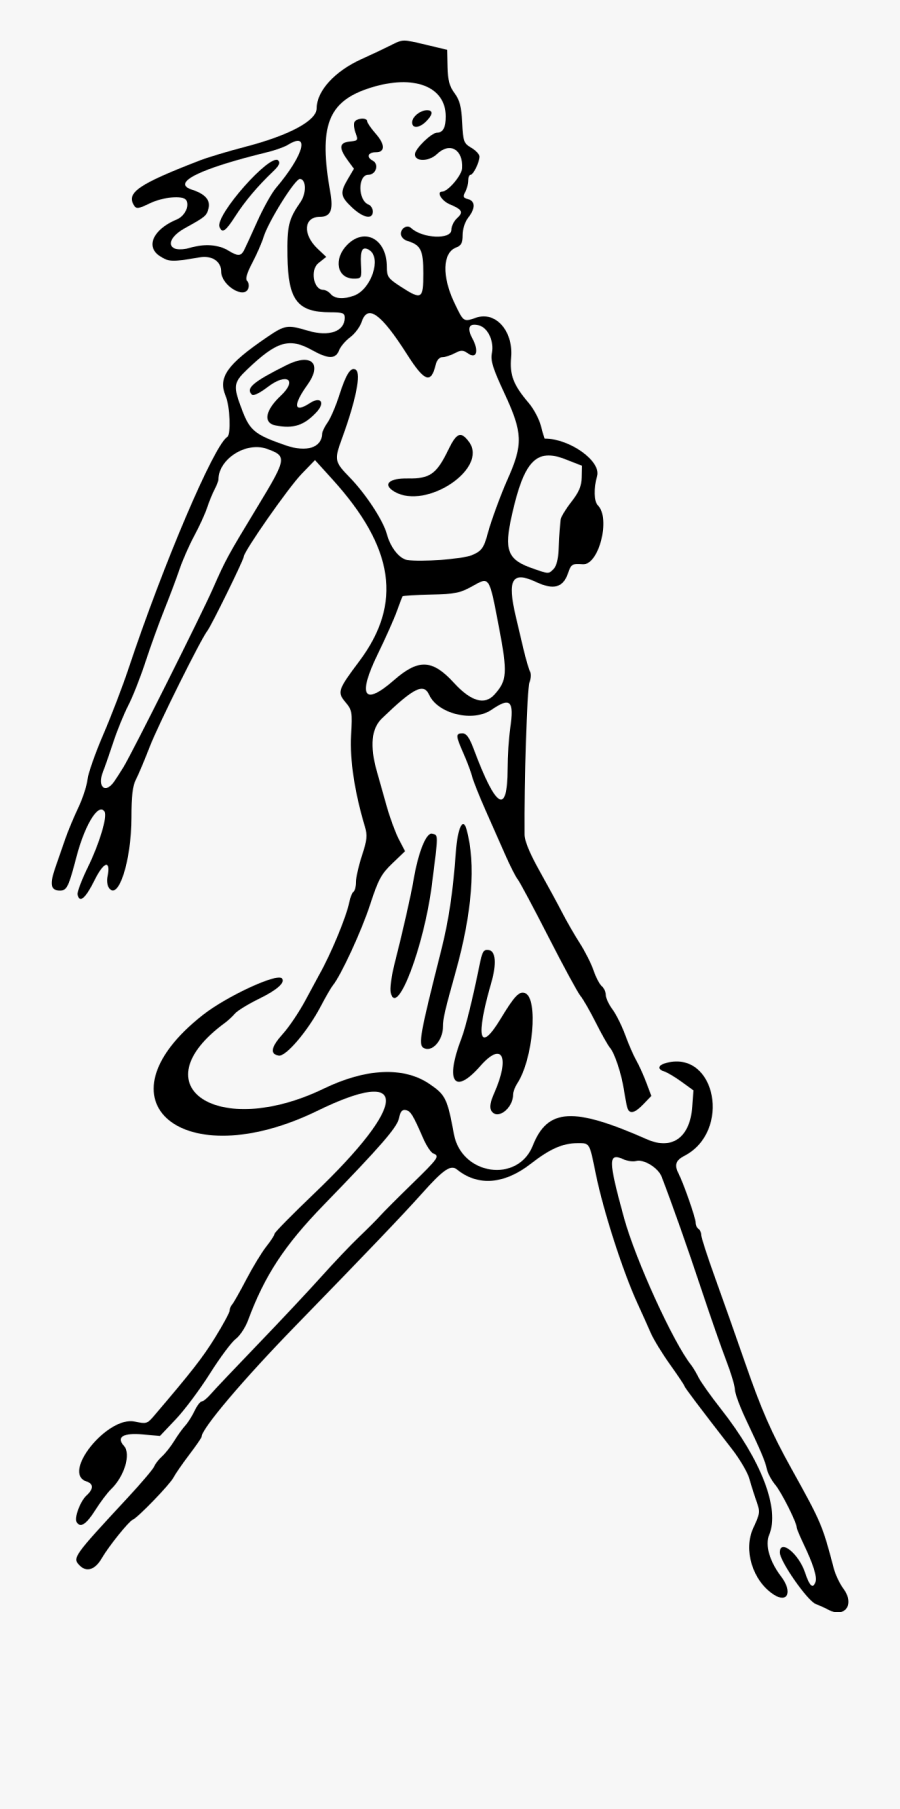 Clipart Walking Woman Walking - Walking Clipart Black And White Transparent, Transparent Clipart